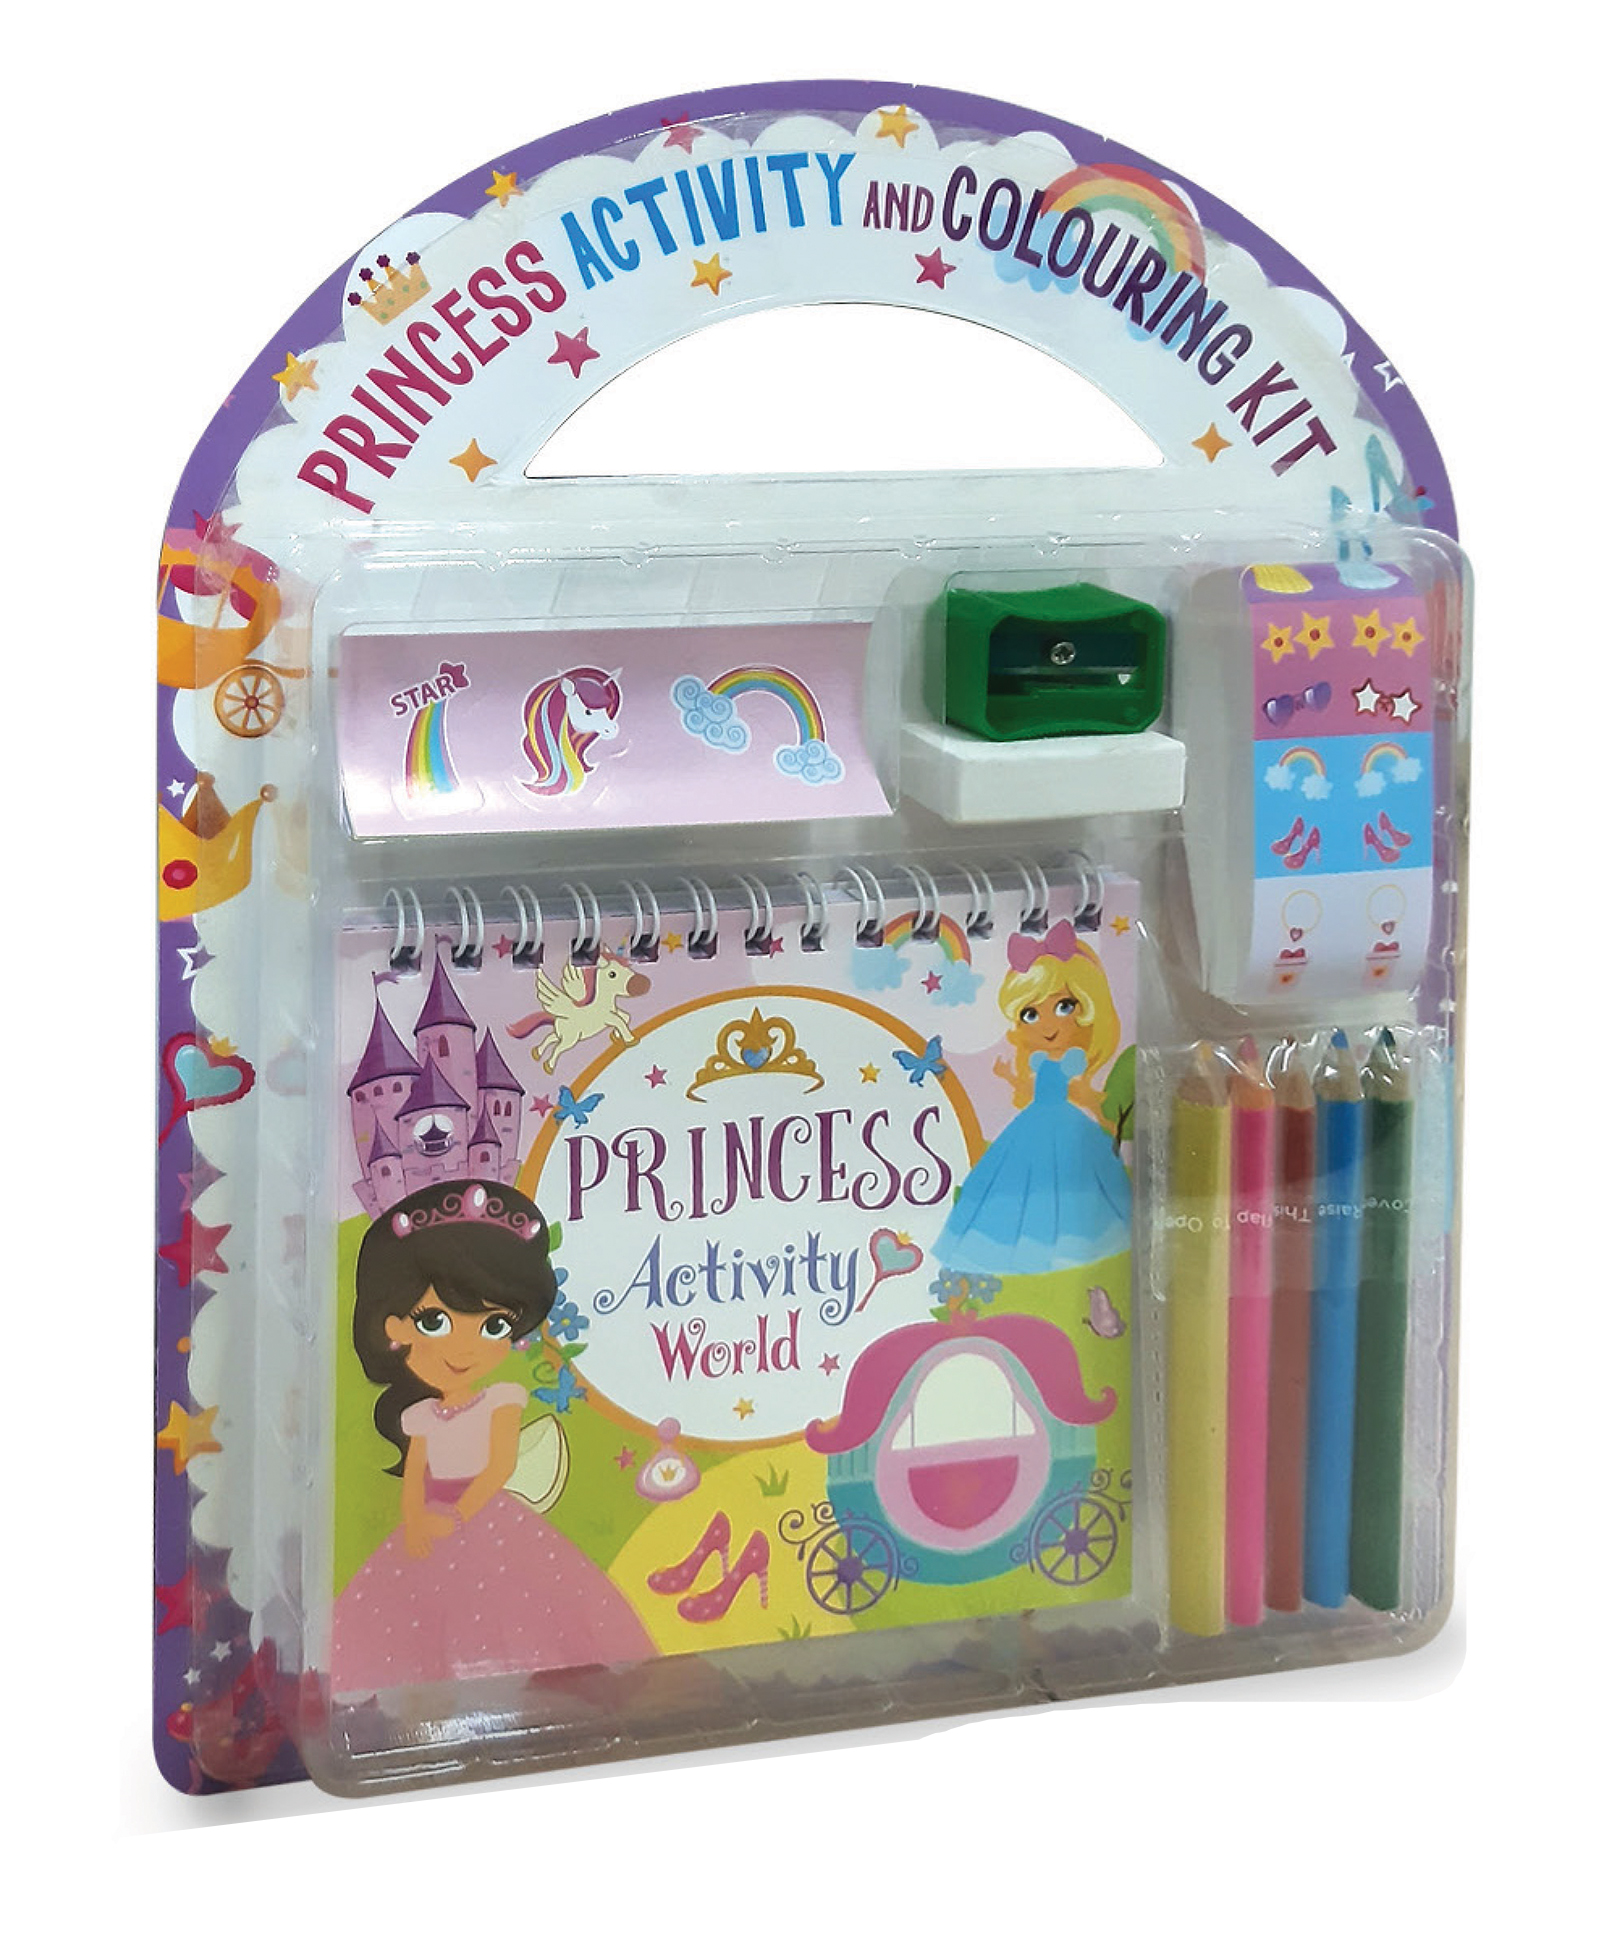 Princess Colouring and Activity Kit